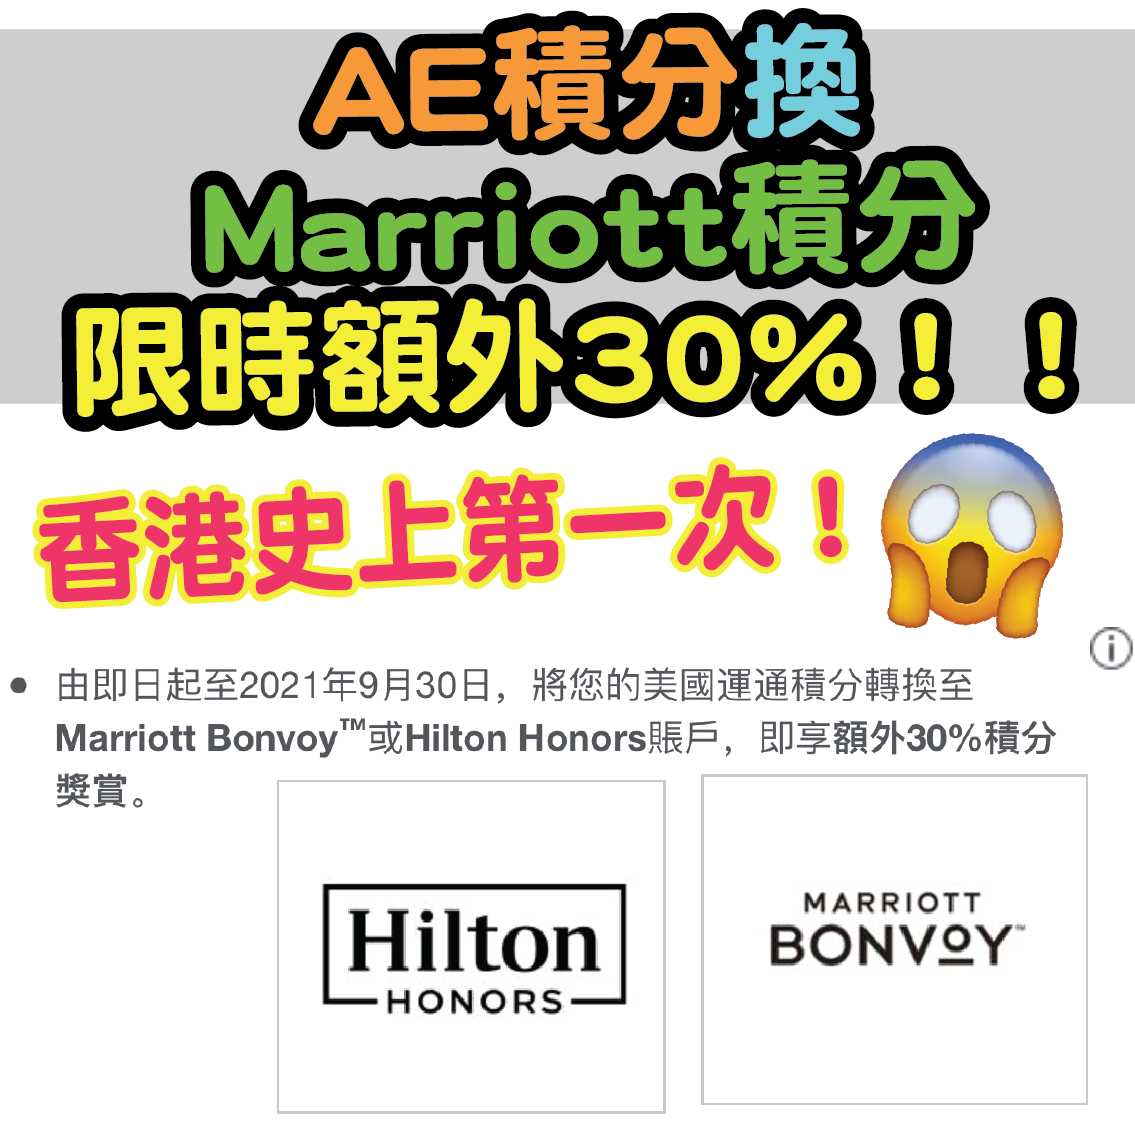 【AE積分】香港史上第一次！用AE積分換Marriott積分限時額外30%！9,000 AE積分可兌換1,300 MARRIOTT BONVOY分！